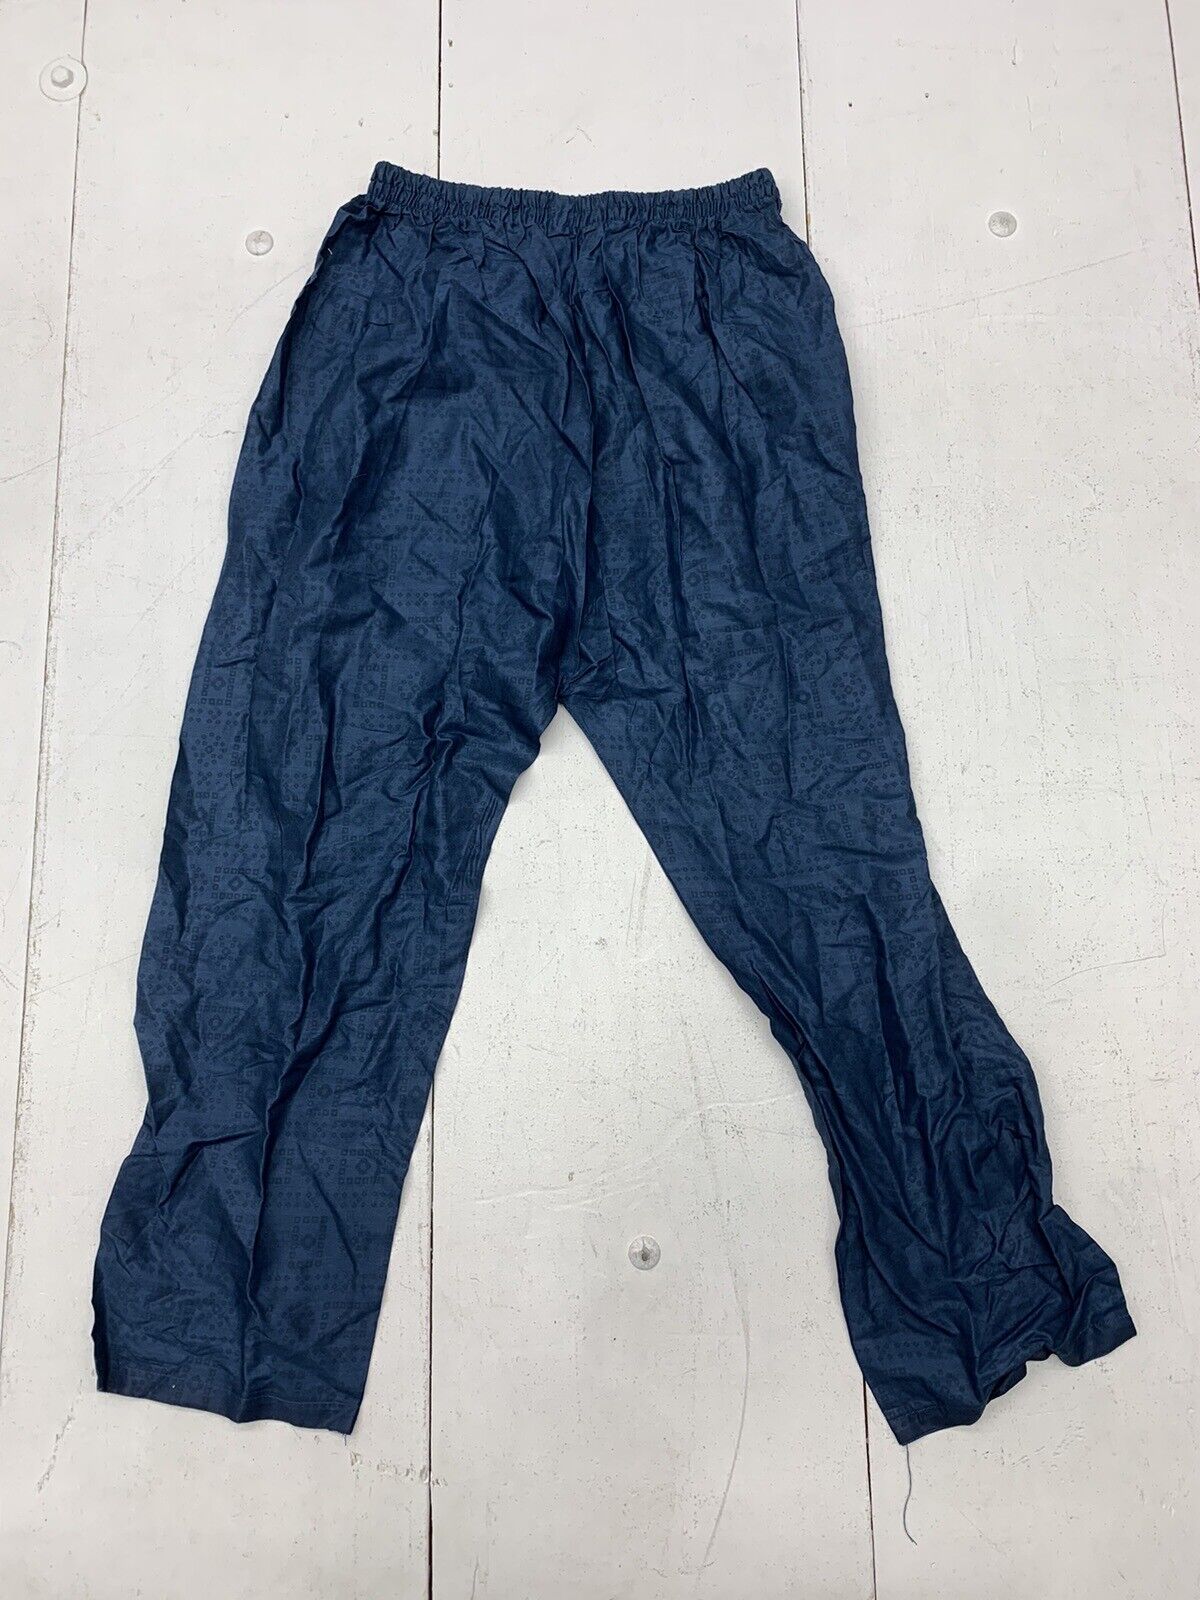 ASOS Womens Dark Blue Track Pants Size Small - beyond exchange